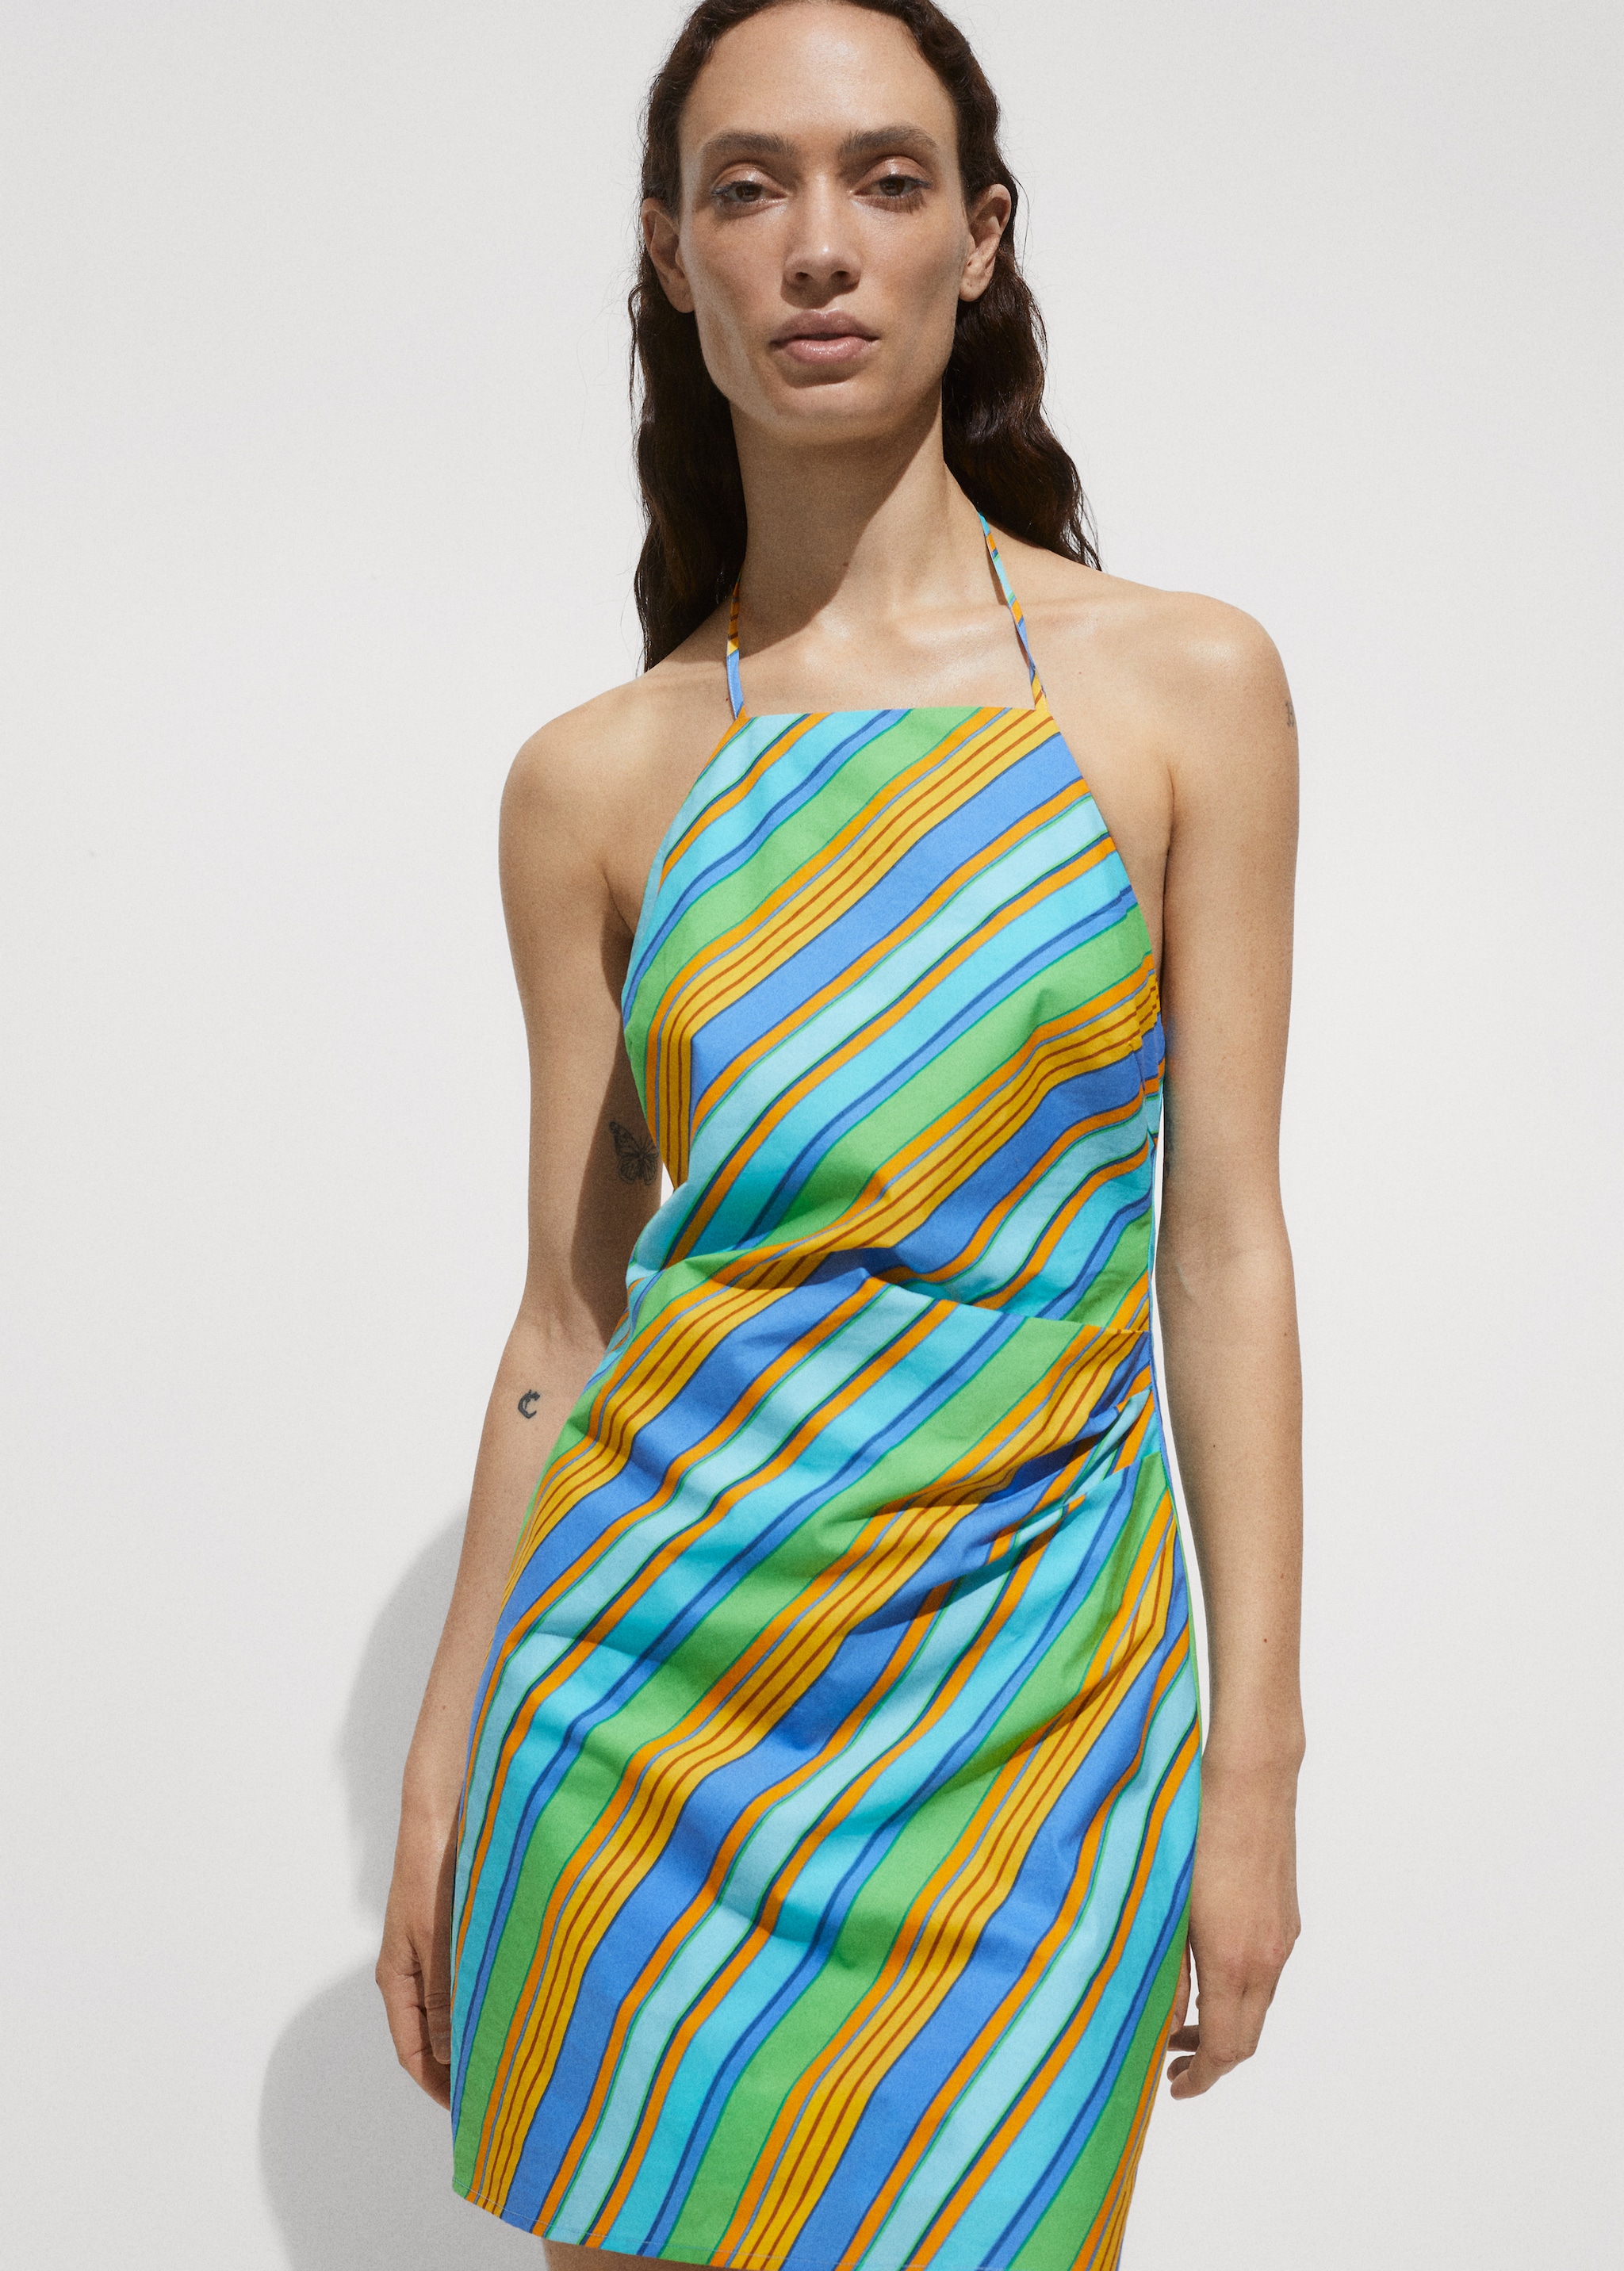 Halter dress with striped print - Medium plane